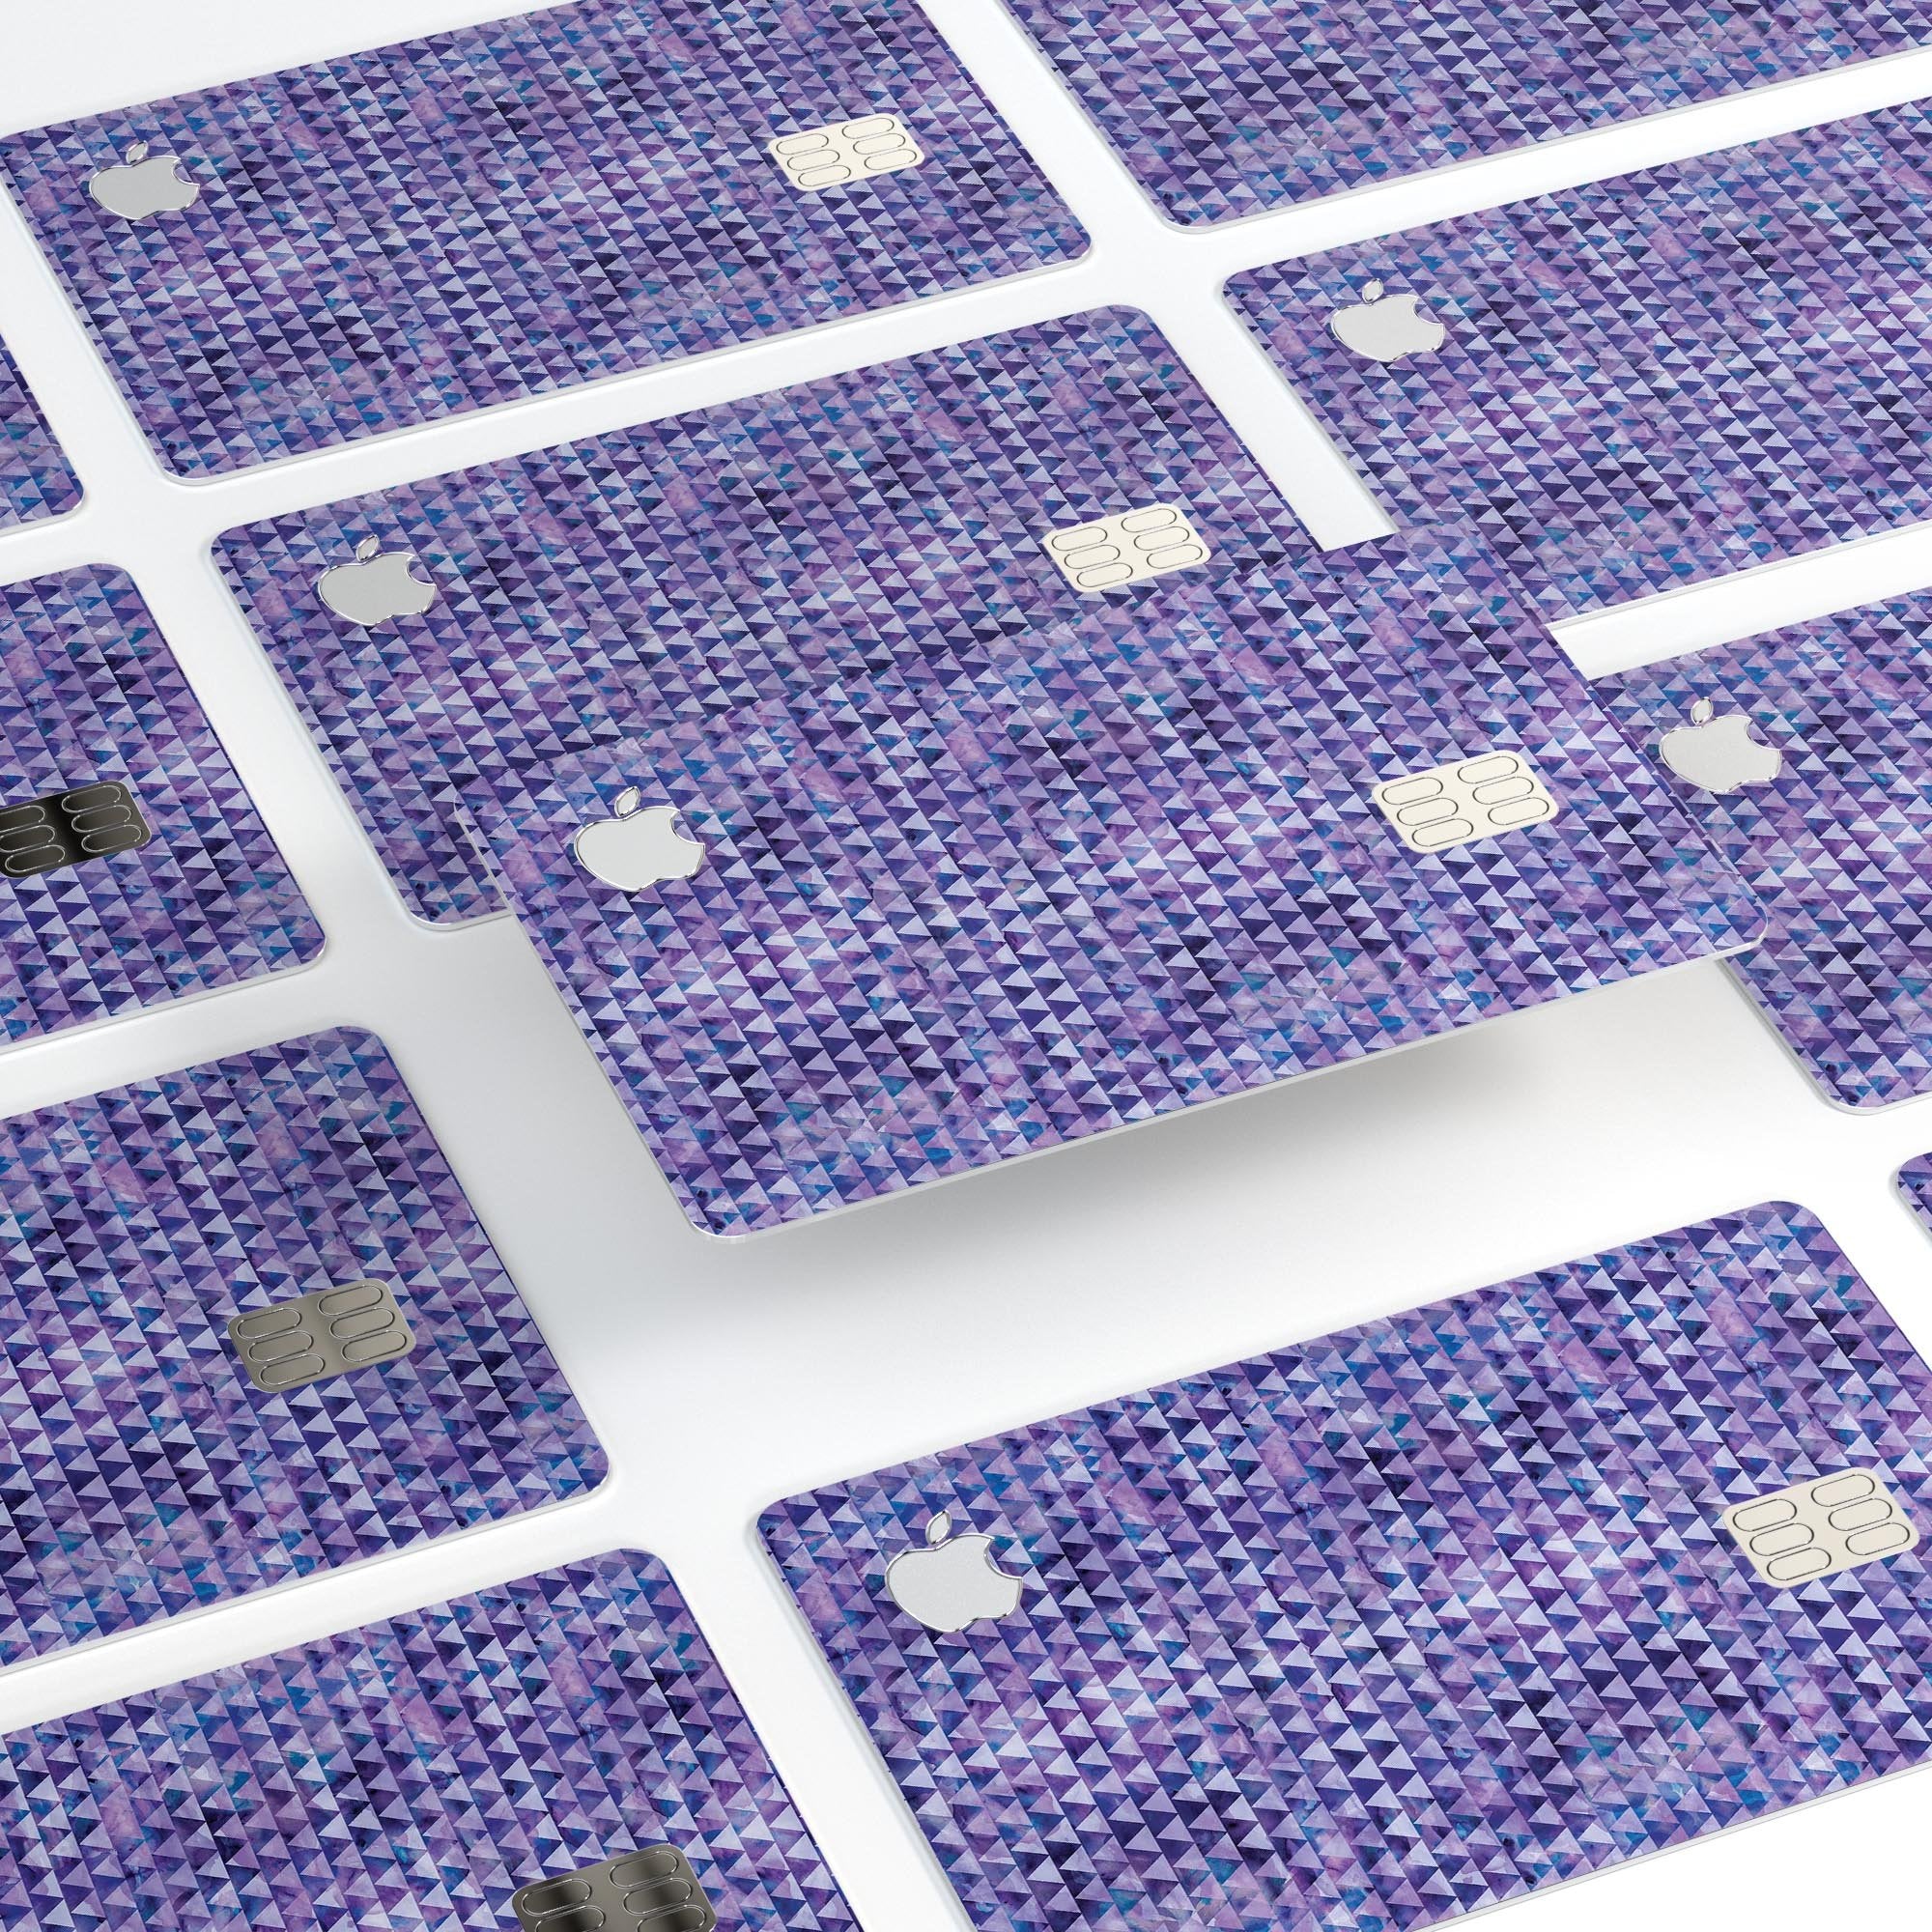 Purple Textured Triangle Pattern - Premium Protective Decal Skin-Kit